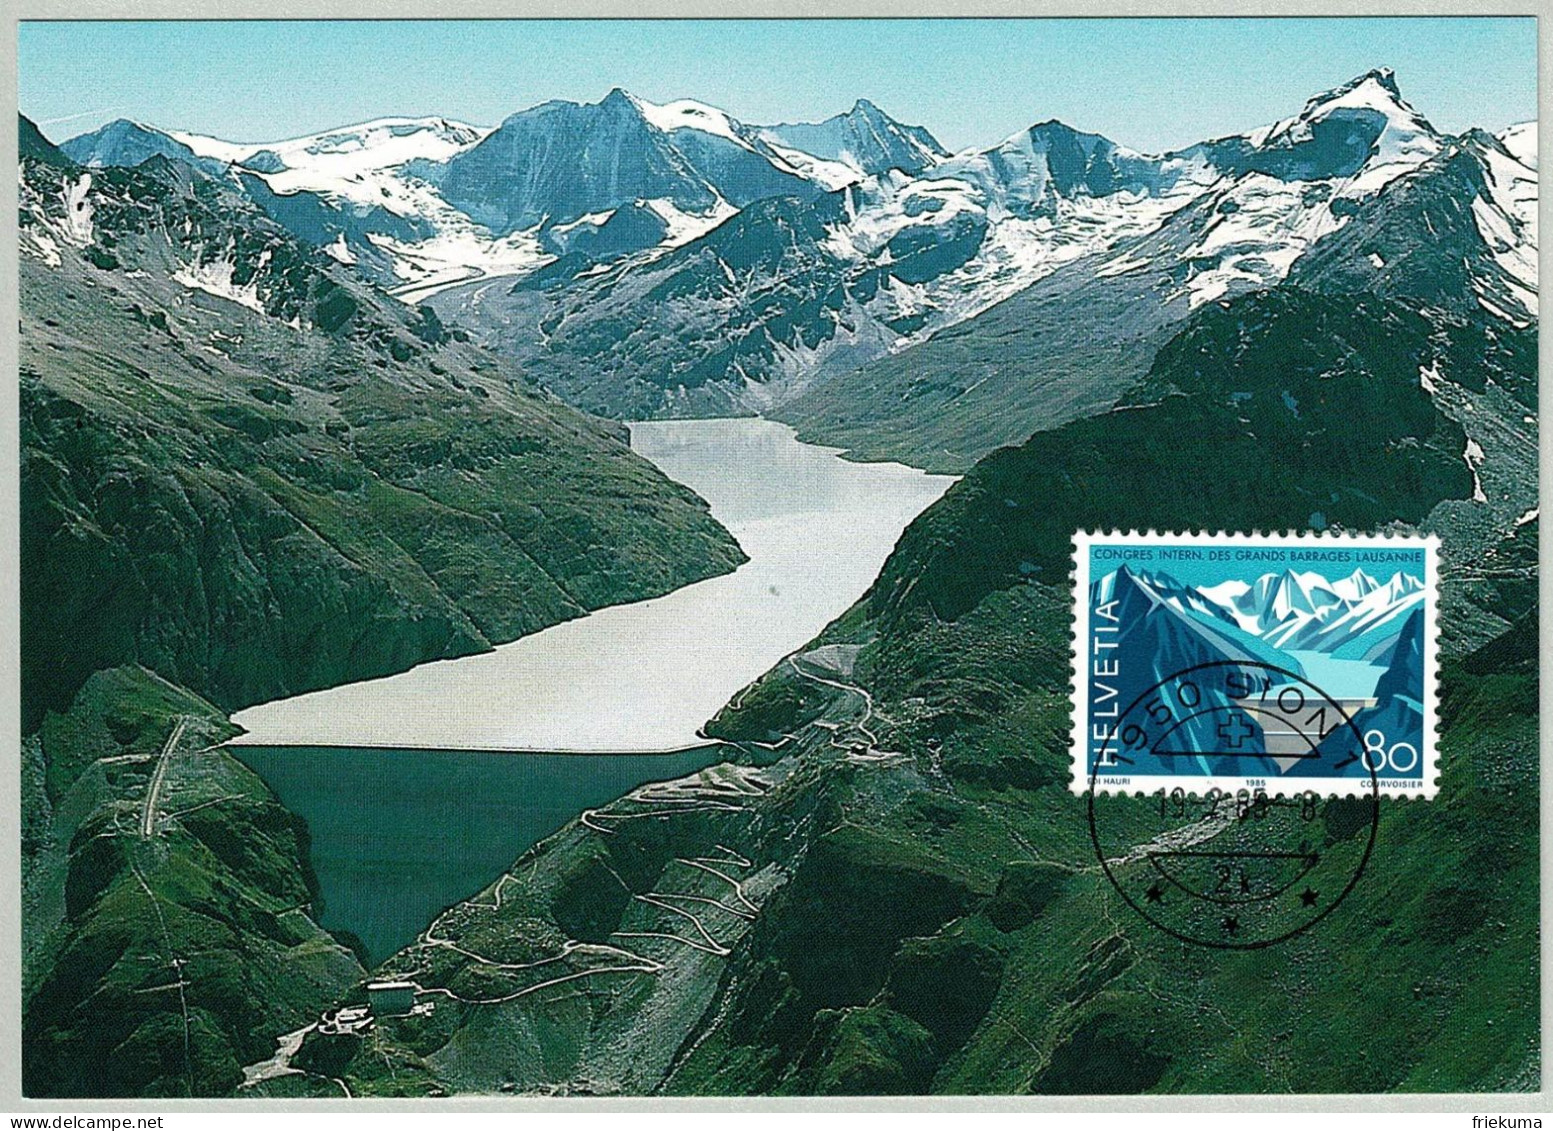 Schweiz / Helvetia 1985, Maximumkarte Kongress Für Talsperren Lausanne, Staumauer Grand-Dixence, Barrage / Dam, Sion - Acqua